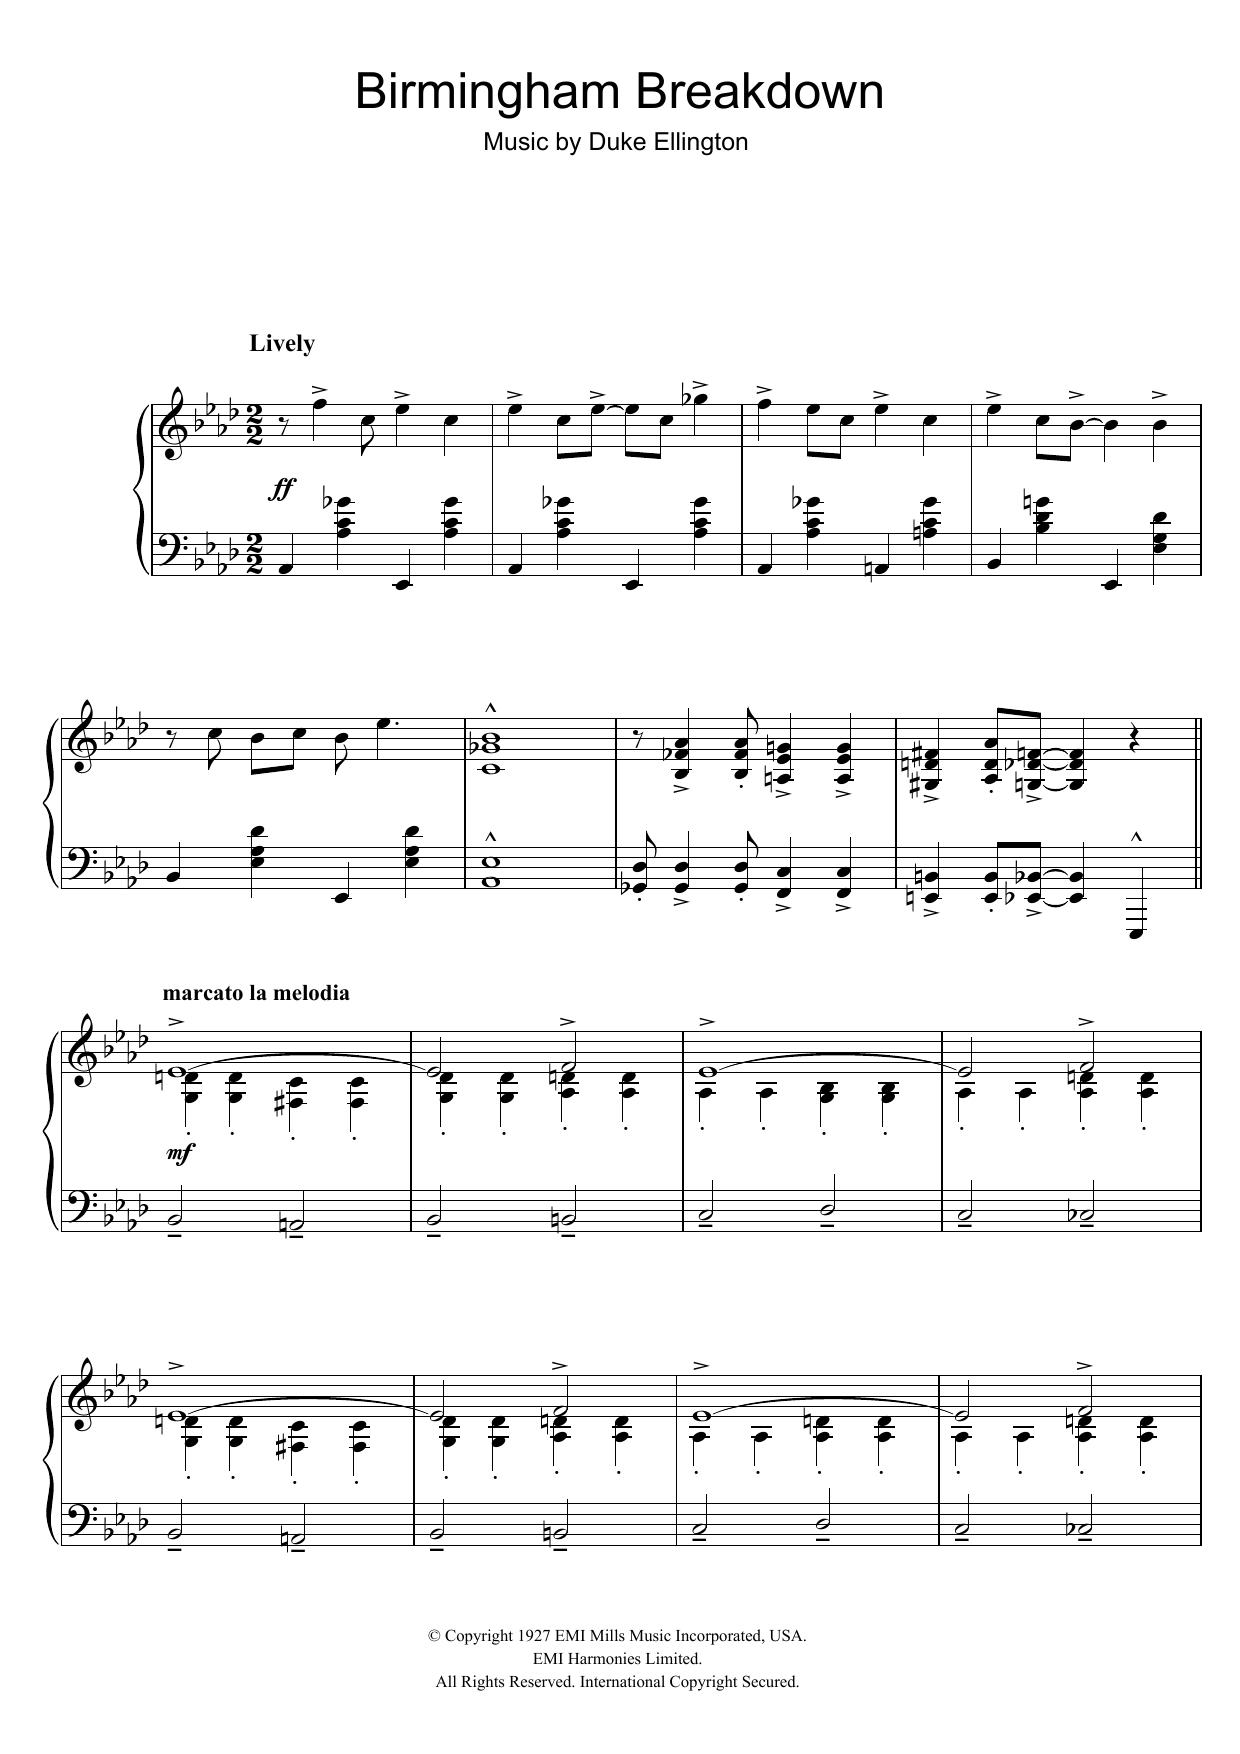 Download Duke Ellington Birmingham Breakdown Sheet Music and learn how to play Piano PDF digital score in minutes